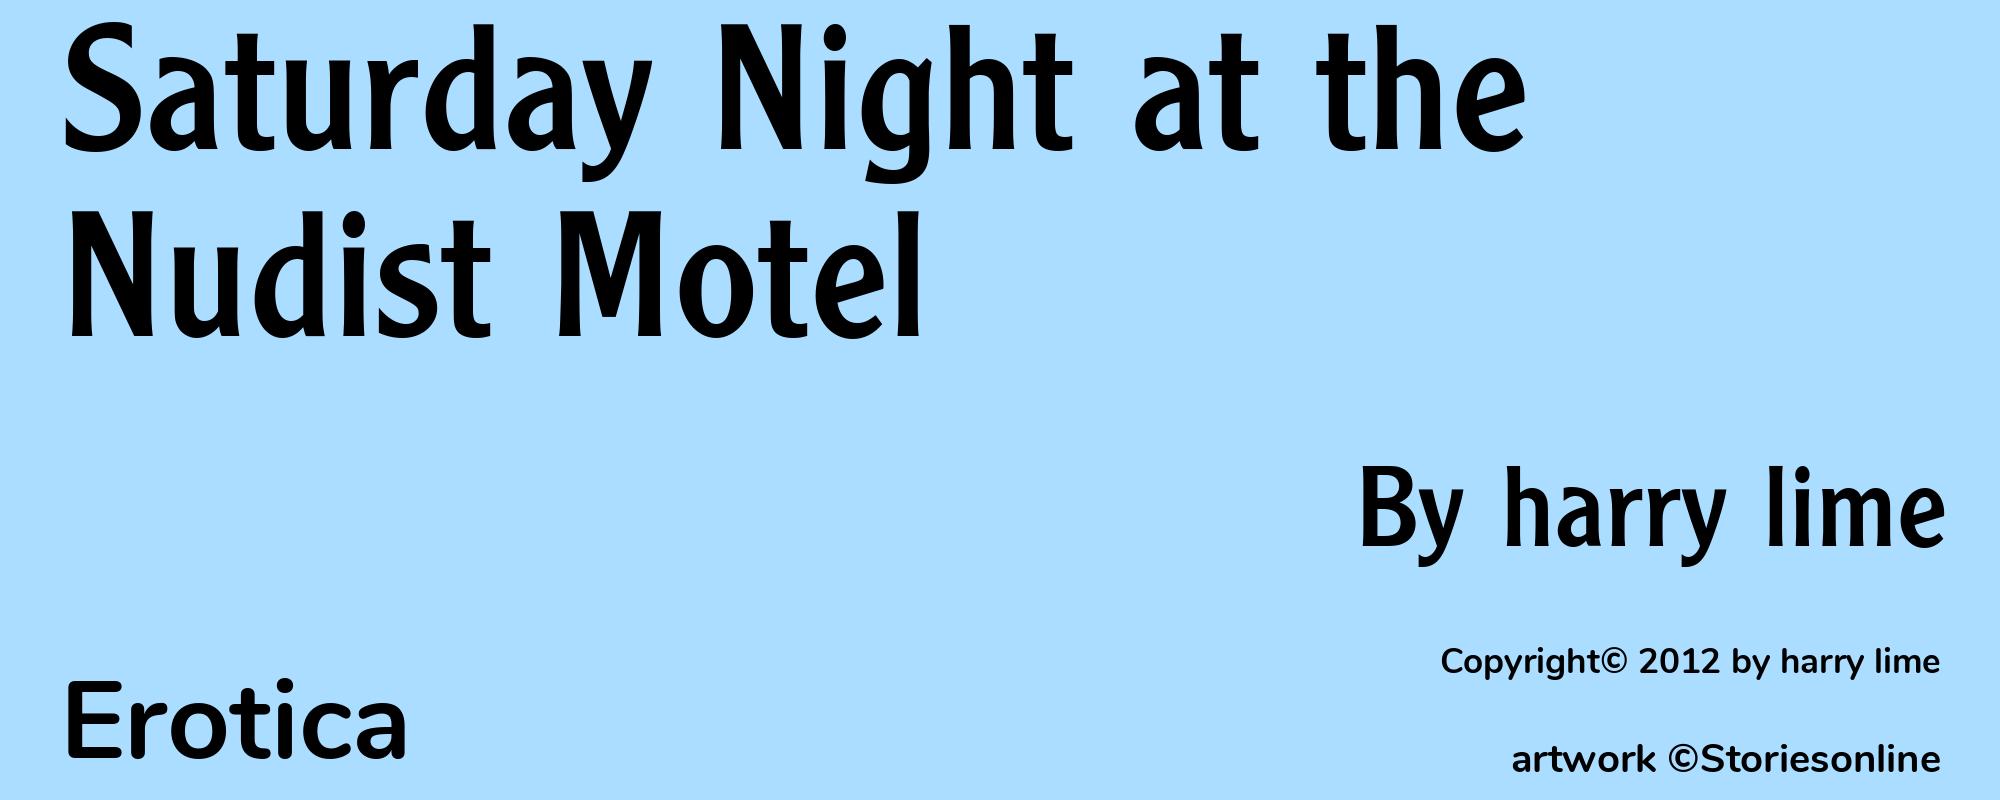 Saturday Night at the Nudist Motel - Cover